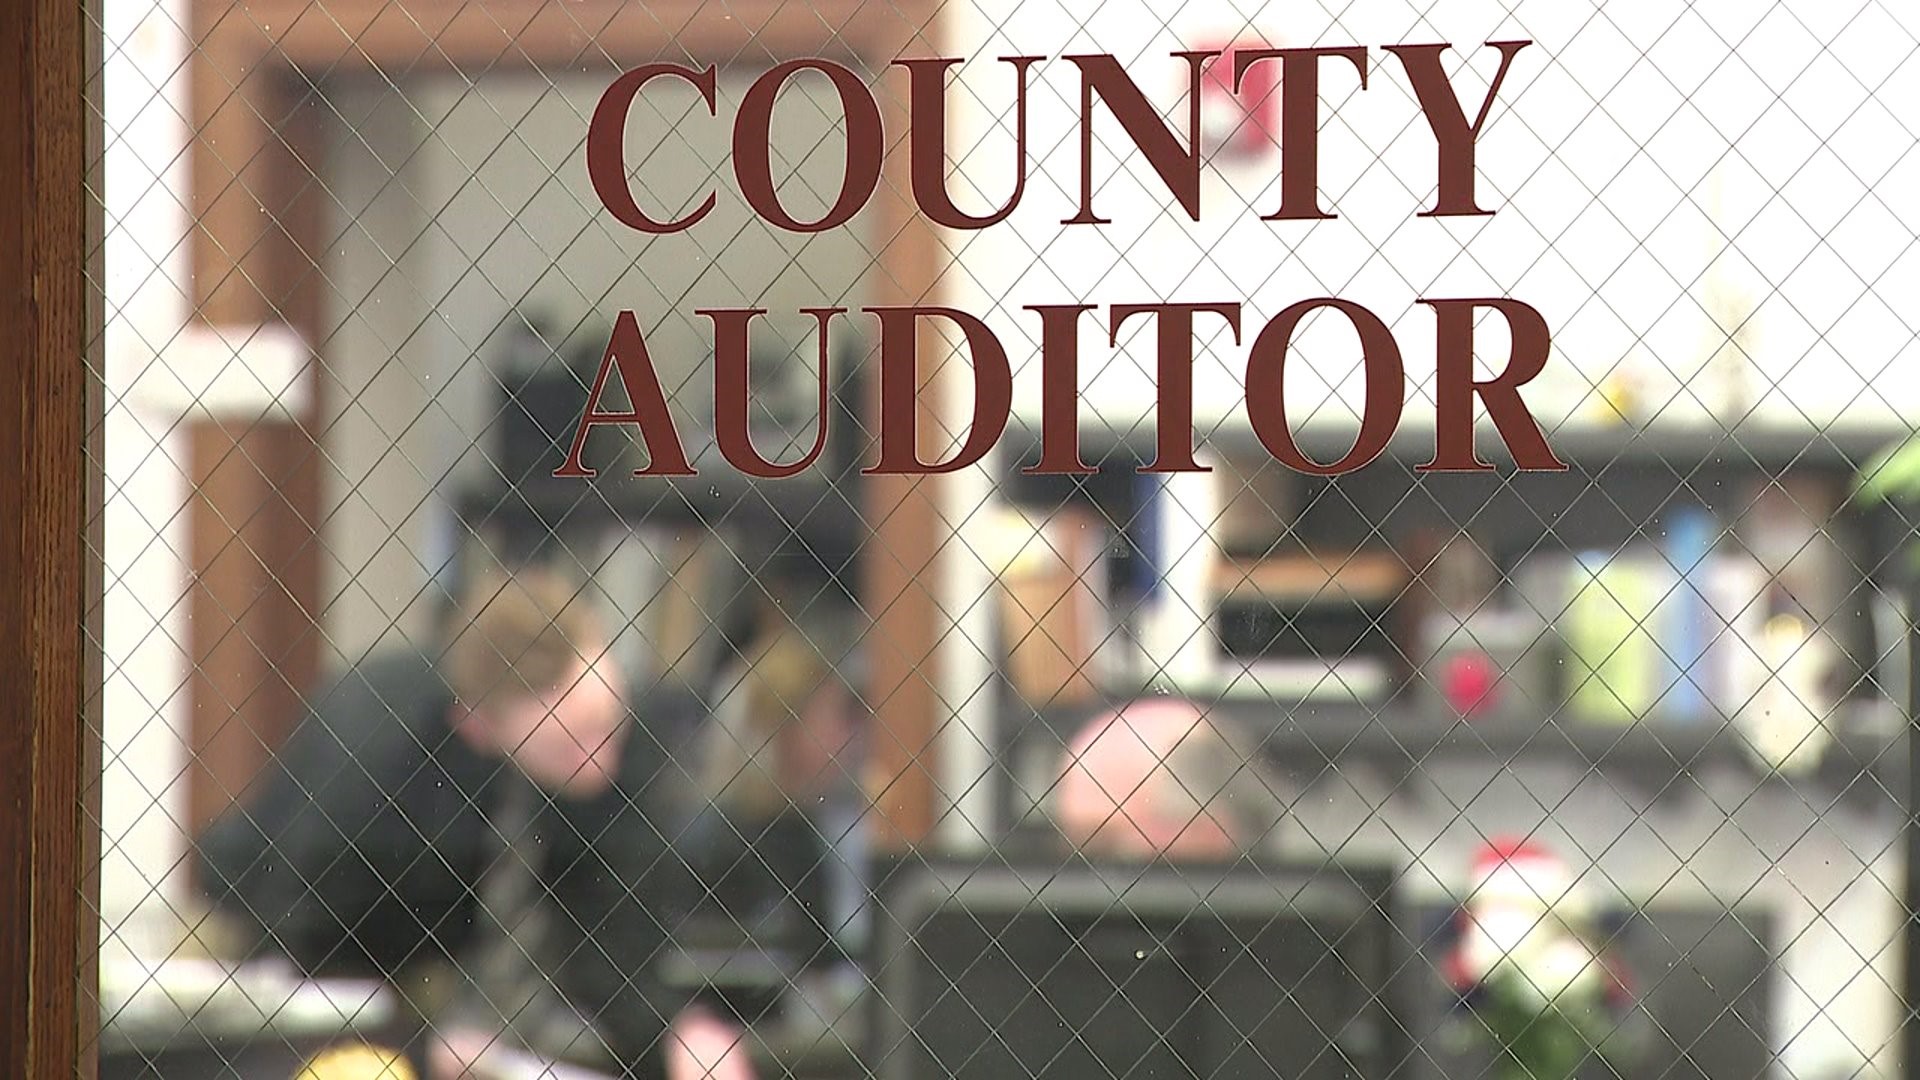 Rock Island County Auditor warns of financial crisis